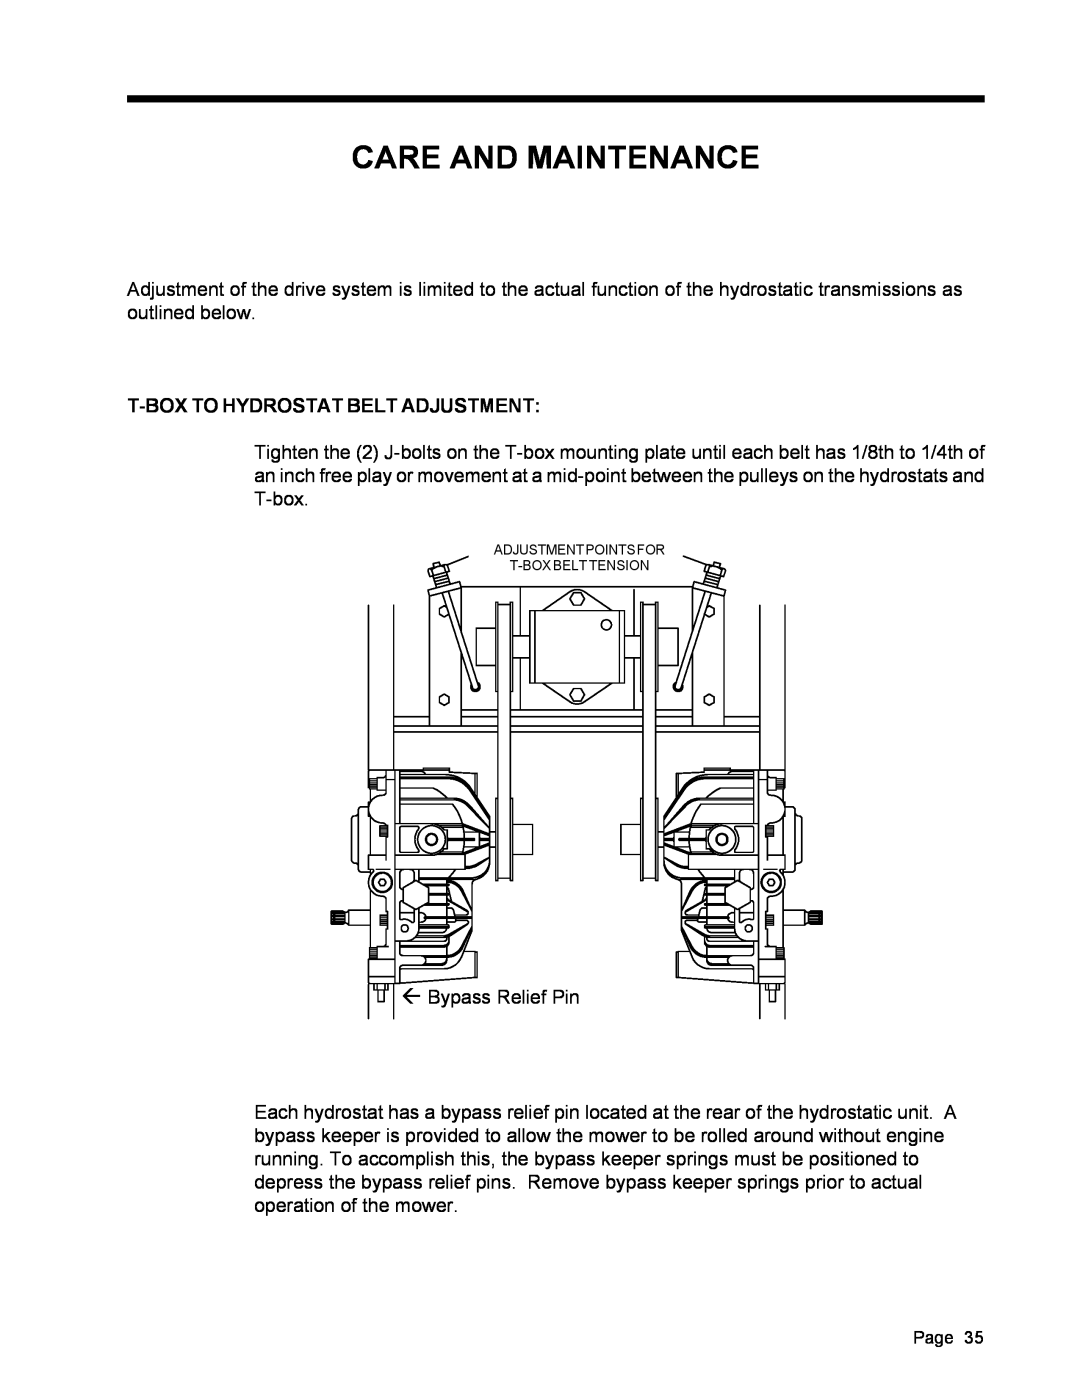 Dixon ZTR 5017, ZTR 5022 manual Care And Maintenance, T-Box To Hydrostat Belt Adjustment 